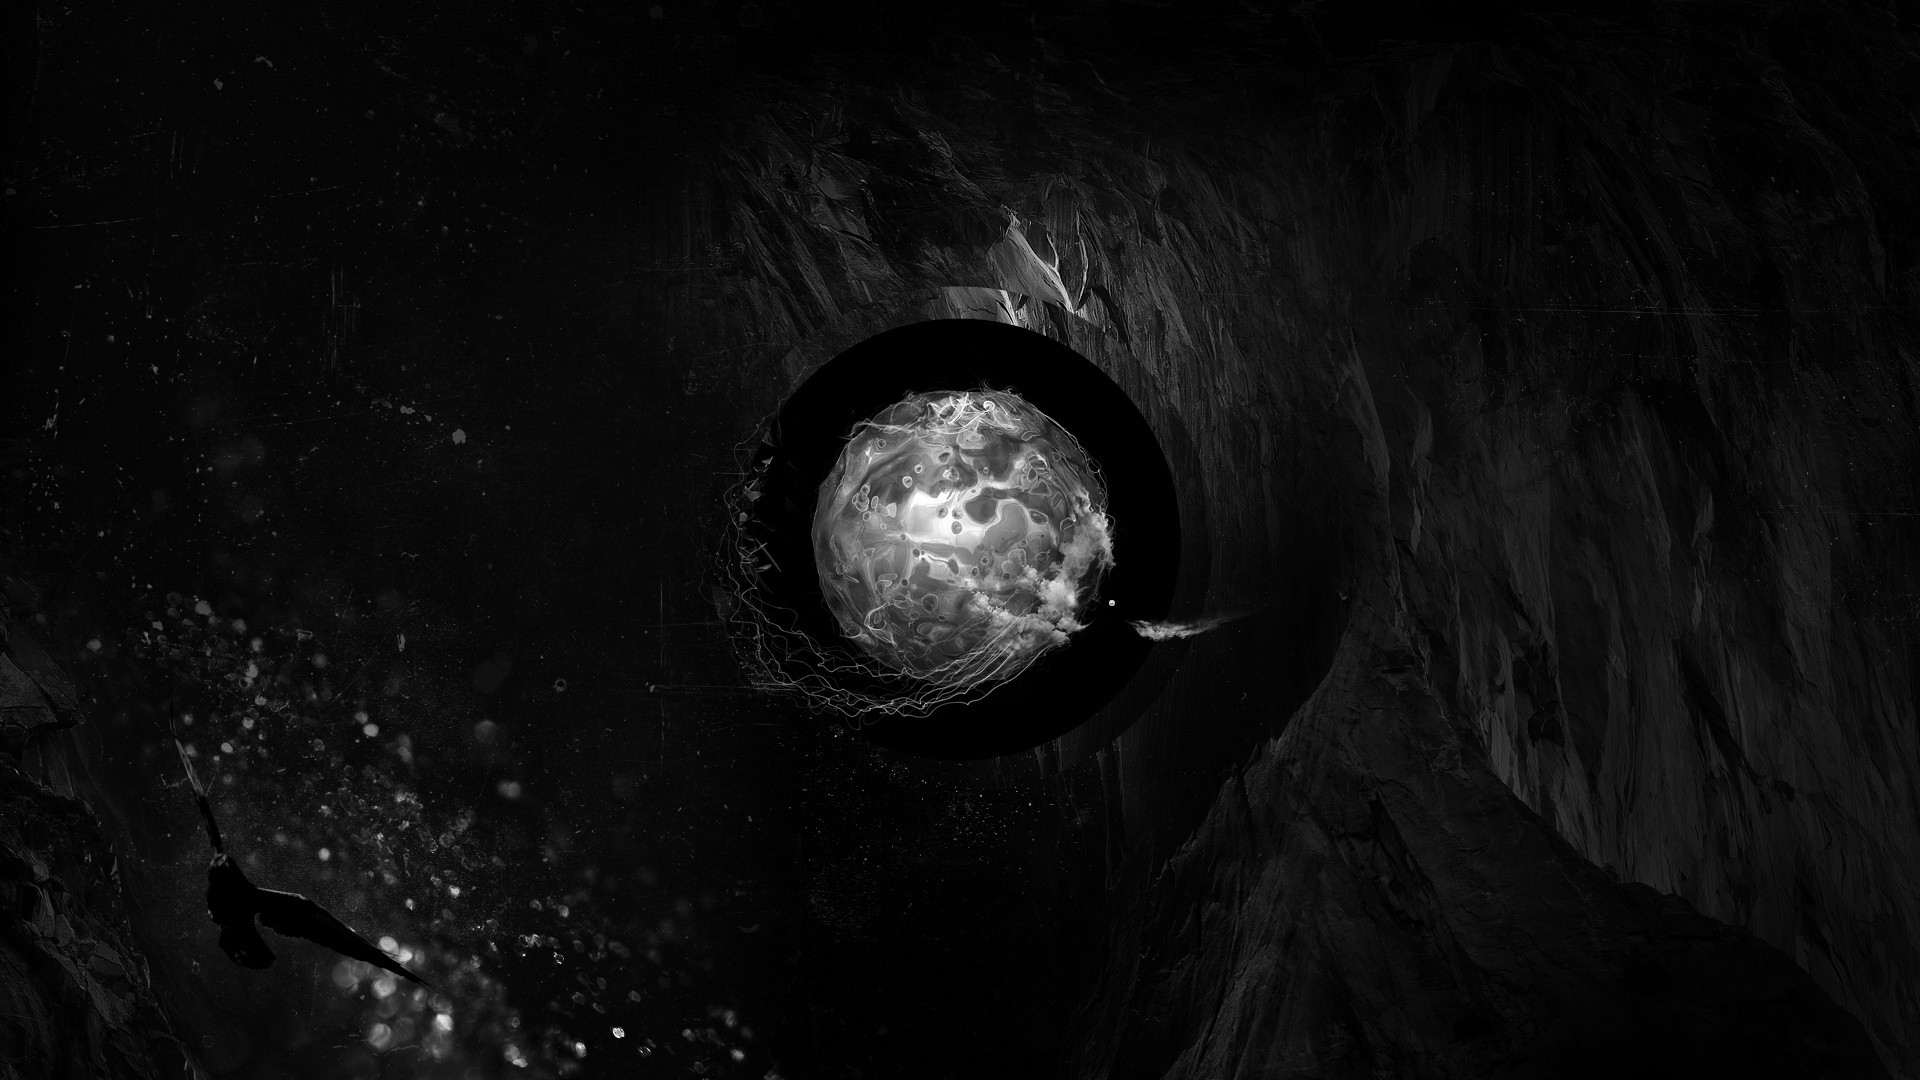 1920x1080 alecio calixto digital art minimalism monochrome abstract globes sphere circle birds dark cave wallpaper JPG 317 kB